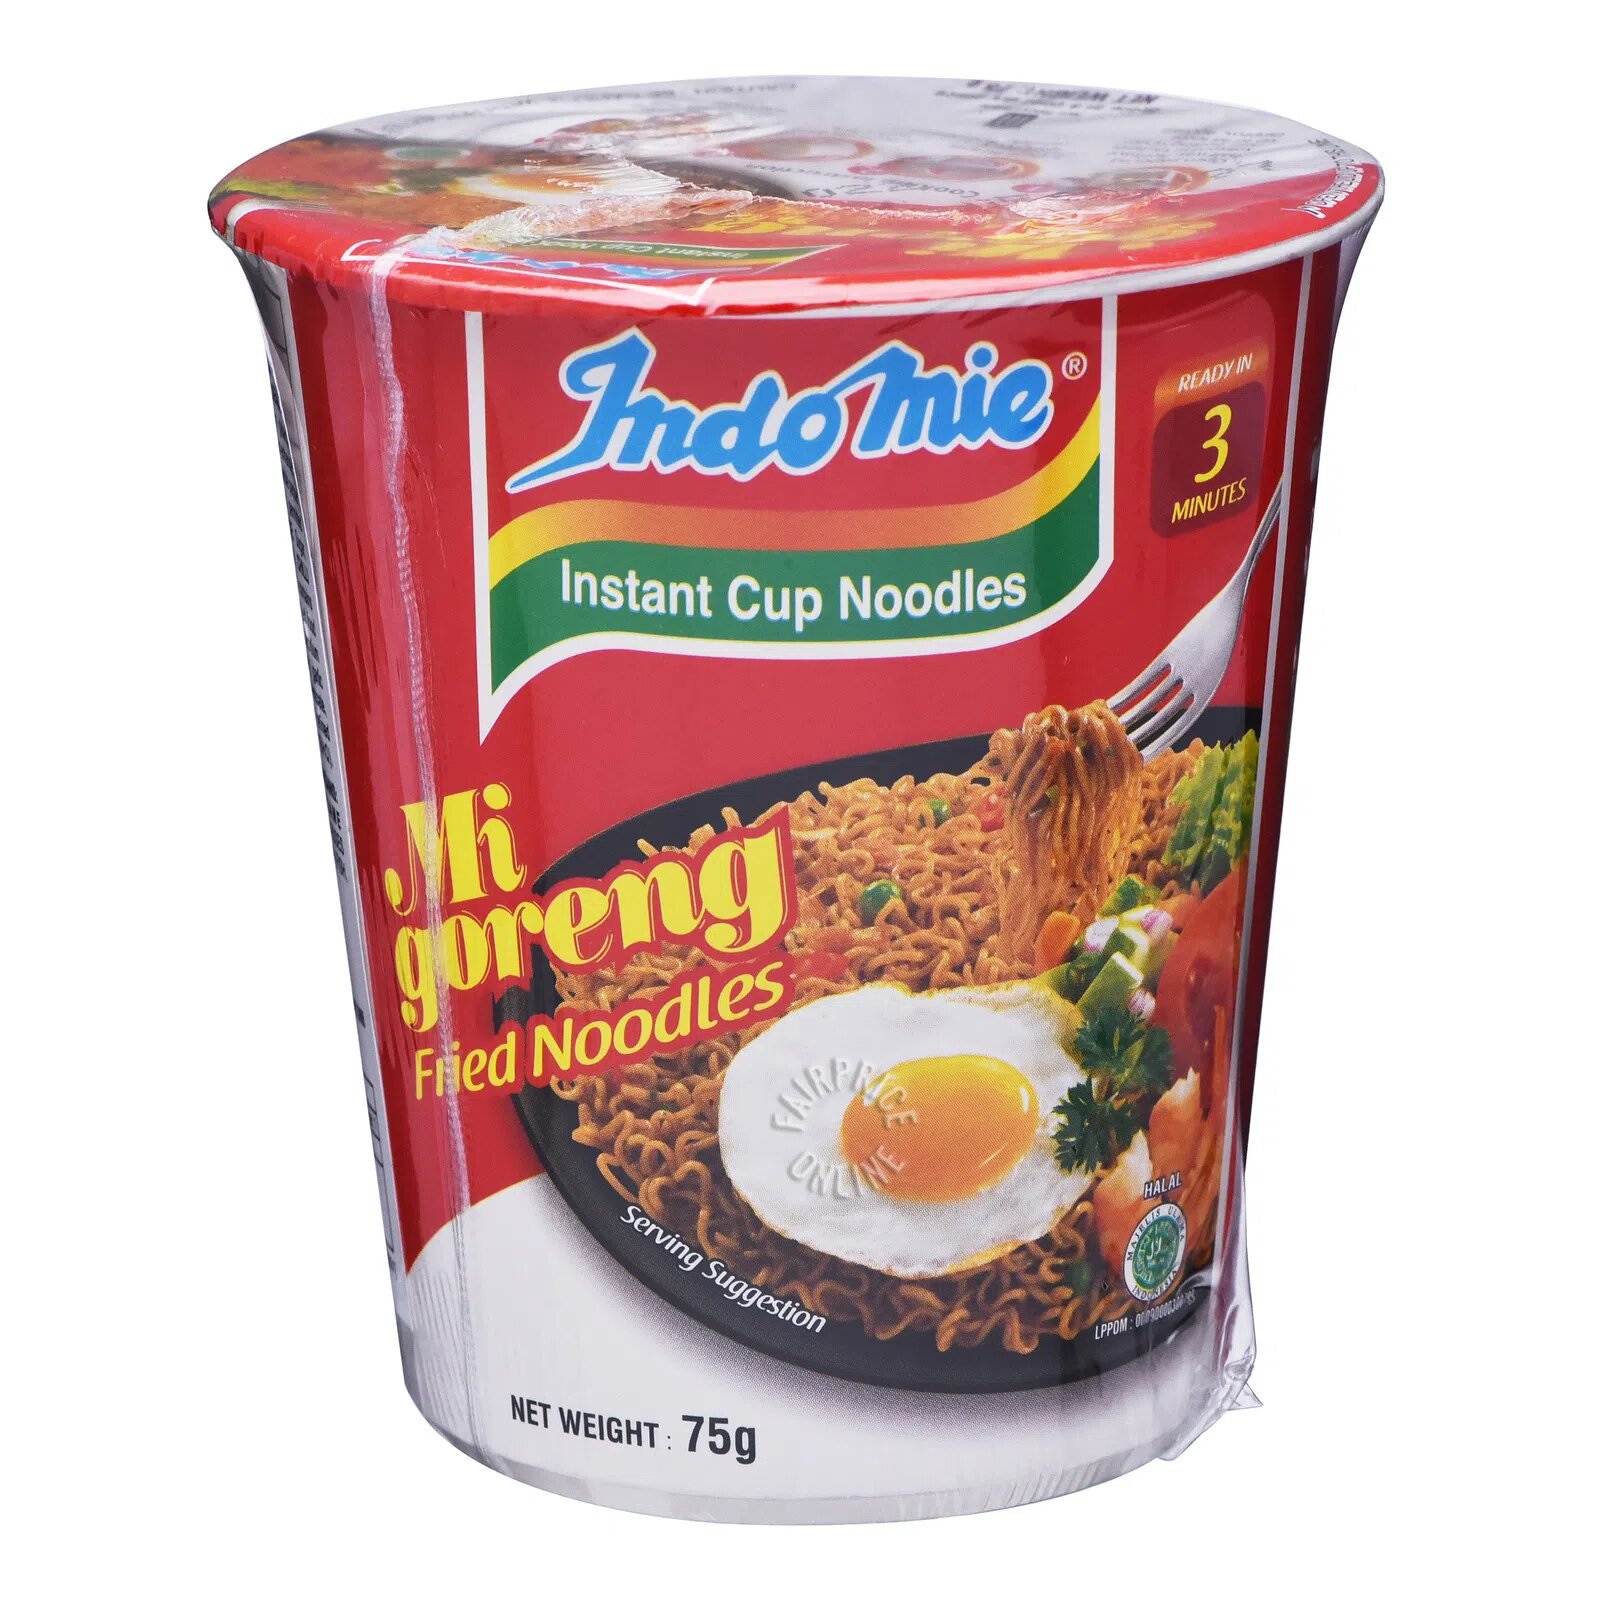 Indomie Mi Goreng Instant Cup Noodles - Fried